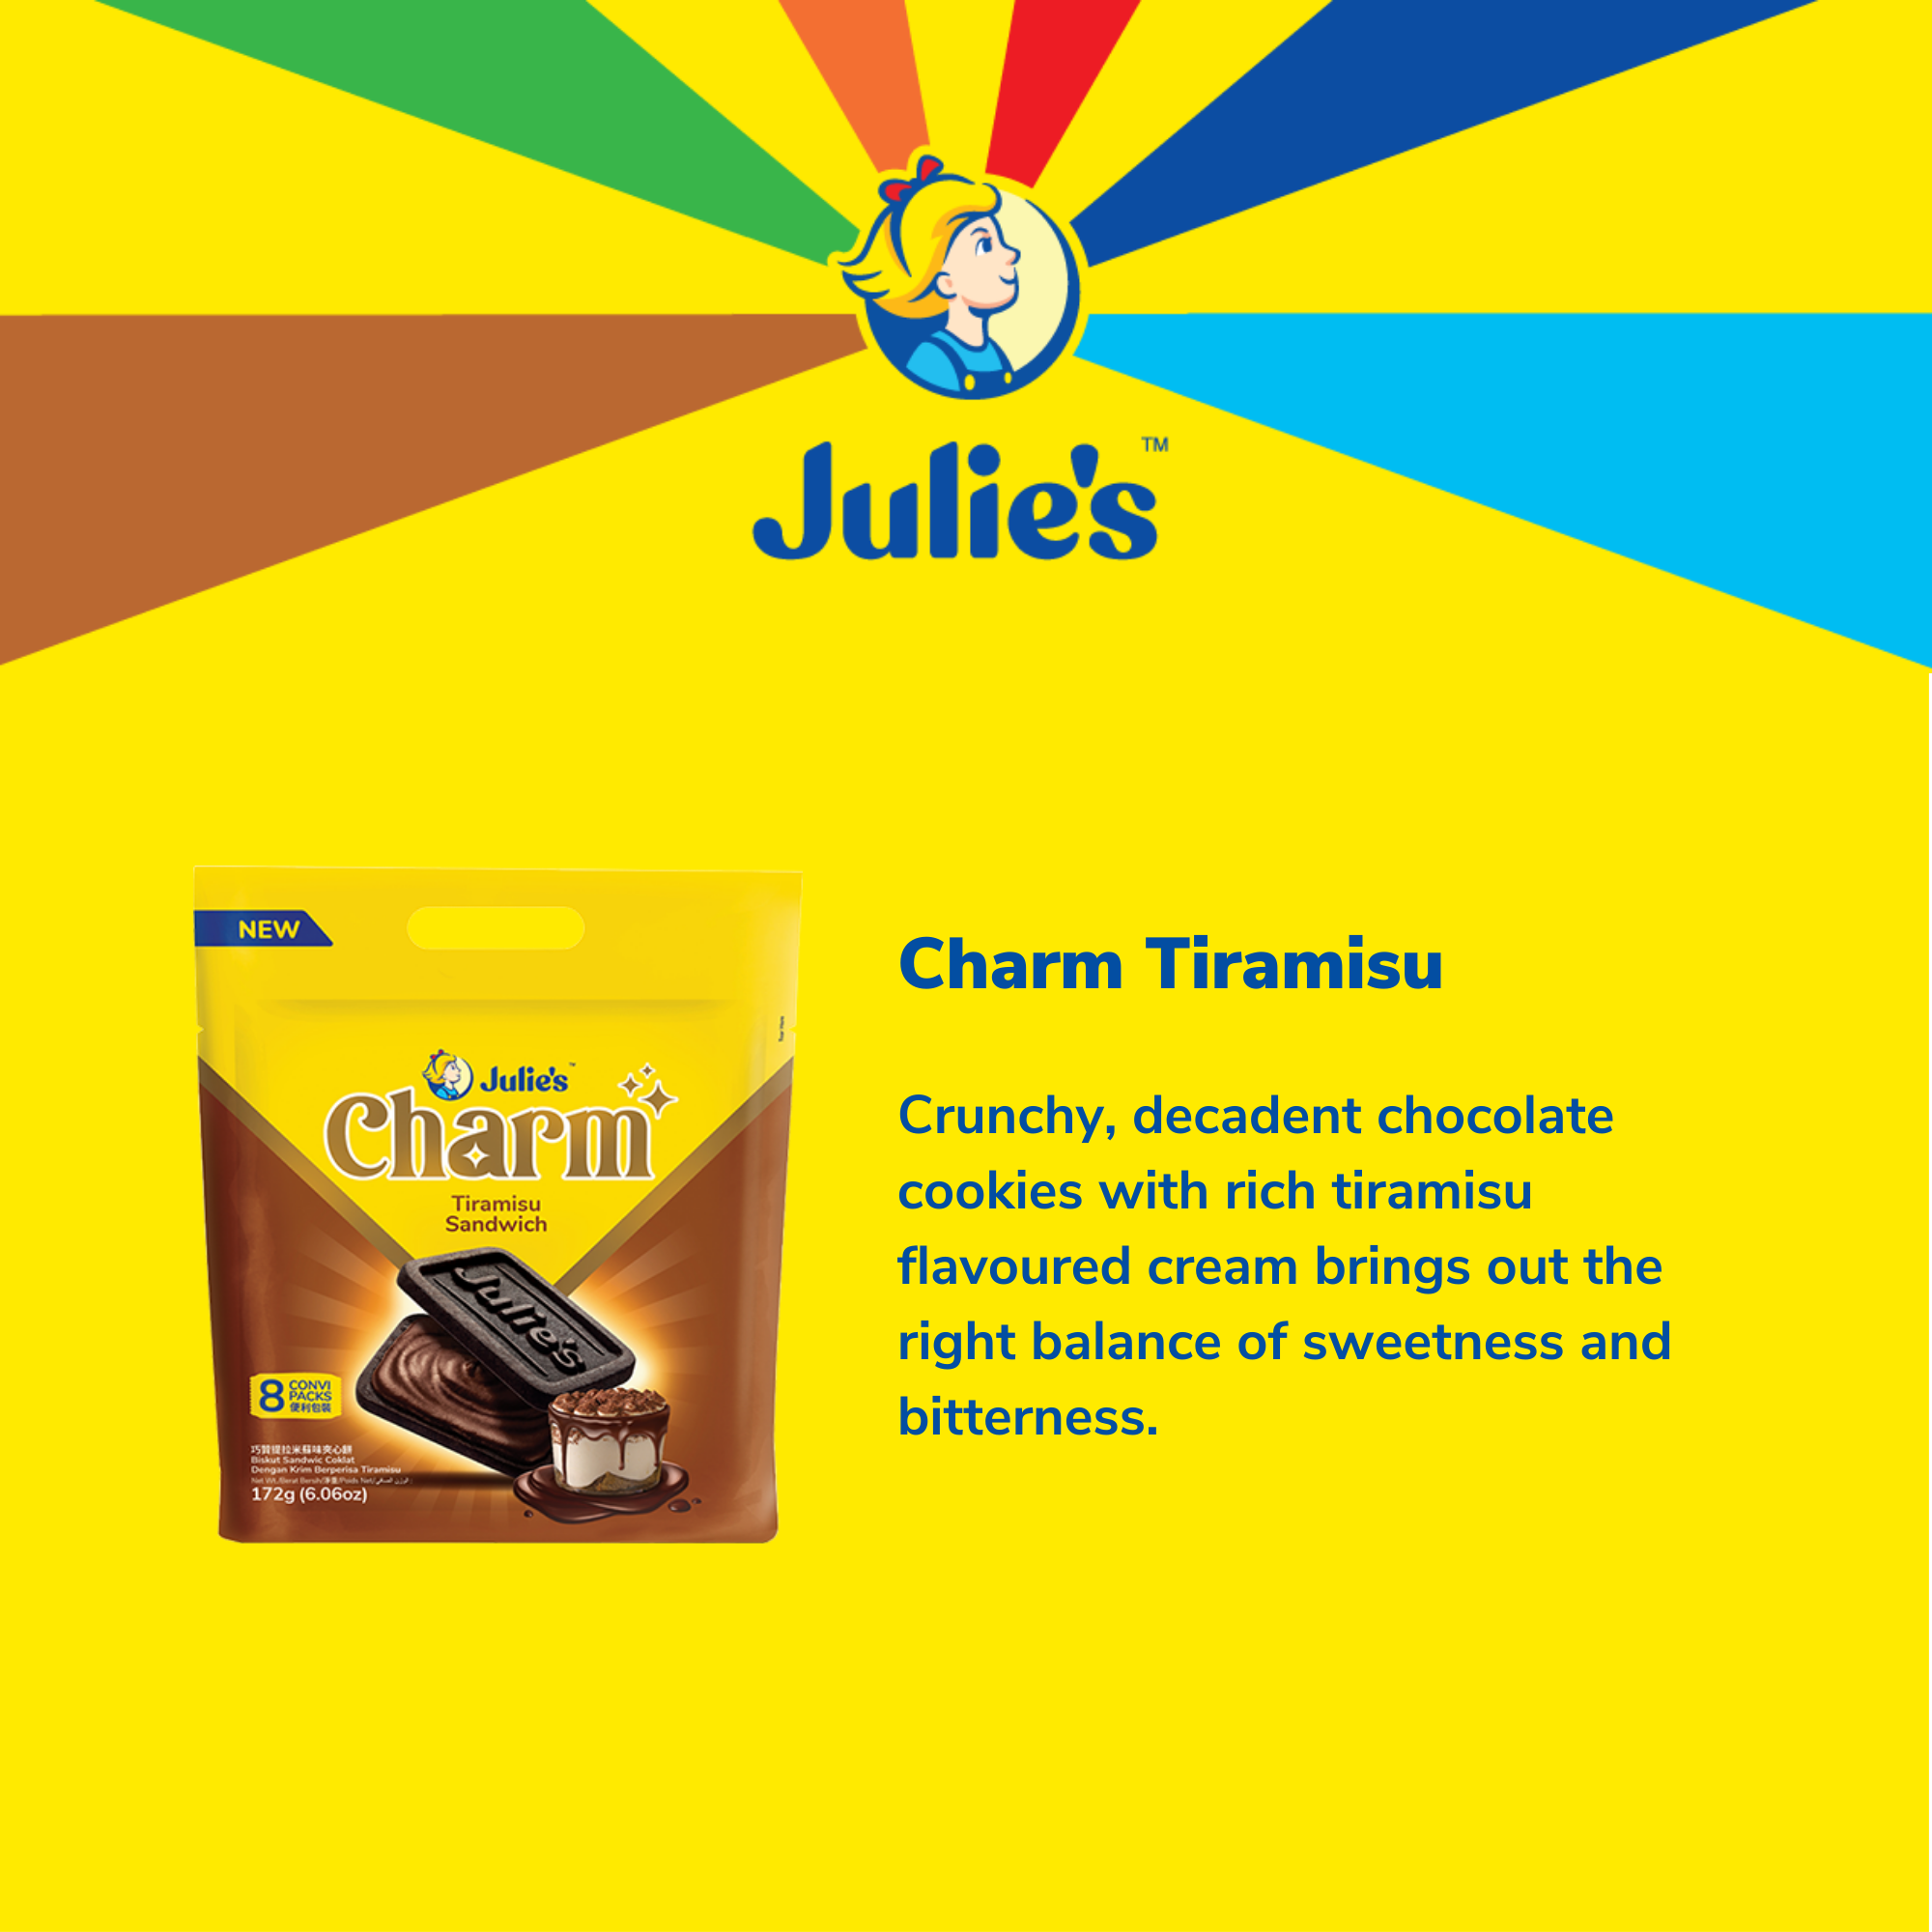 Julie's Charm Tiramisu Sandwich 172g x 1 pack